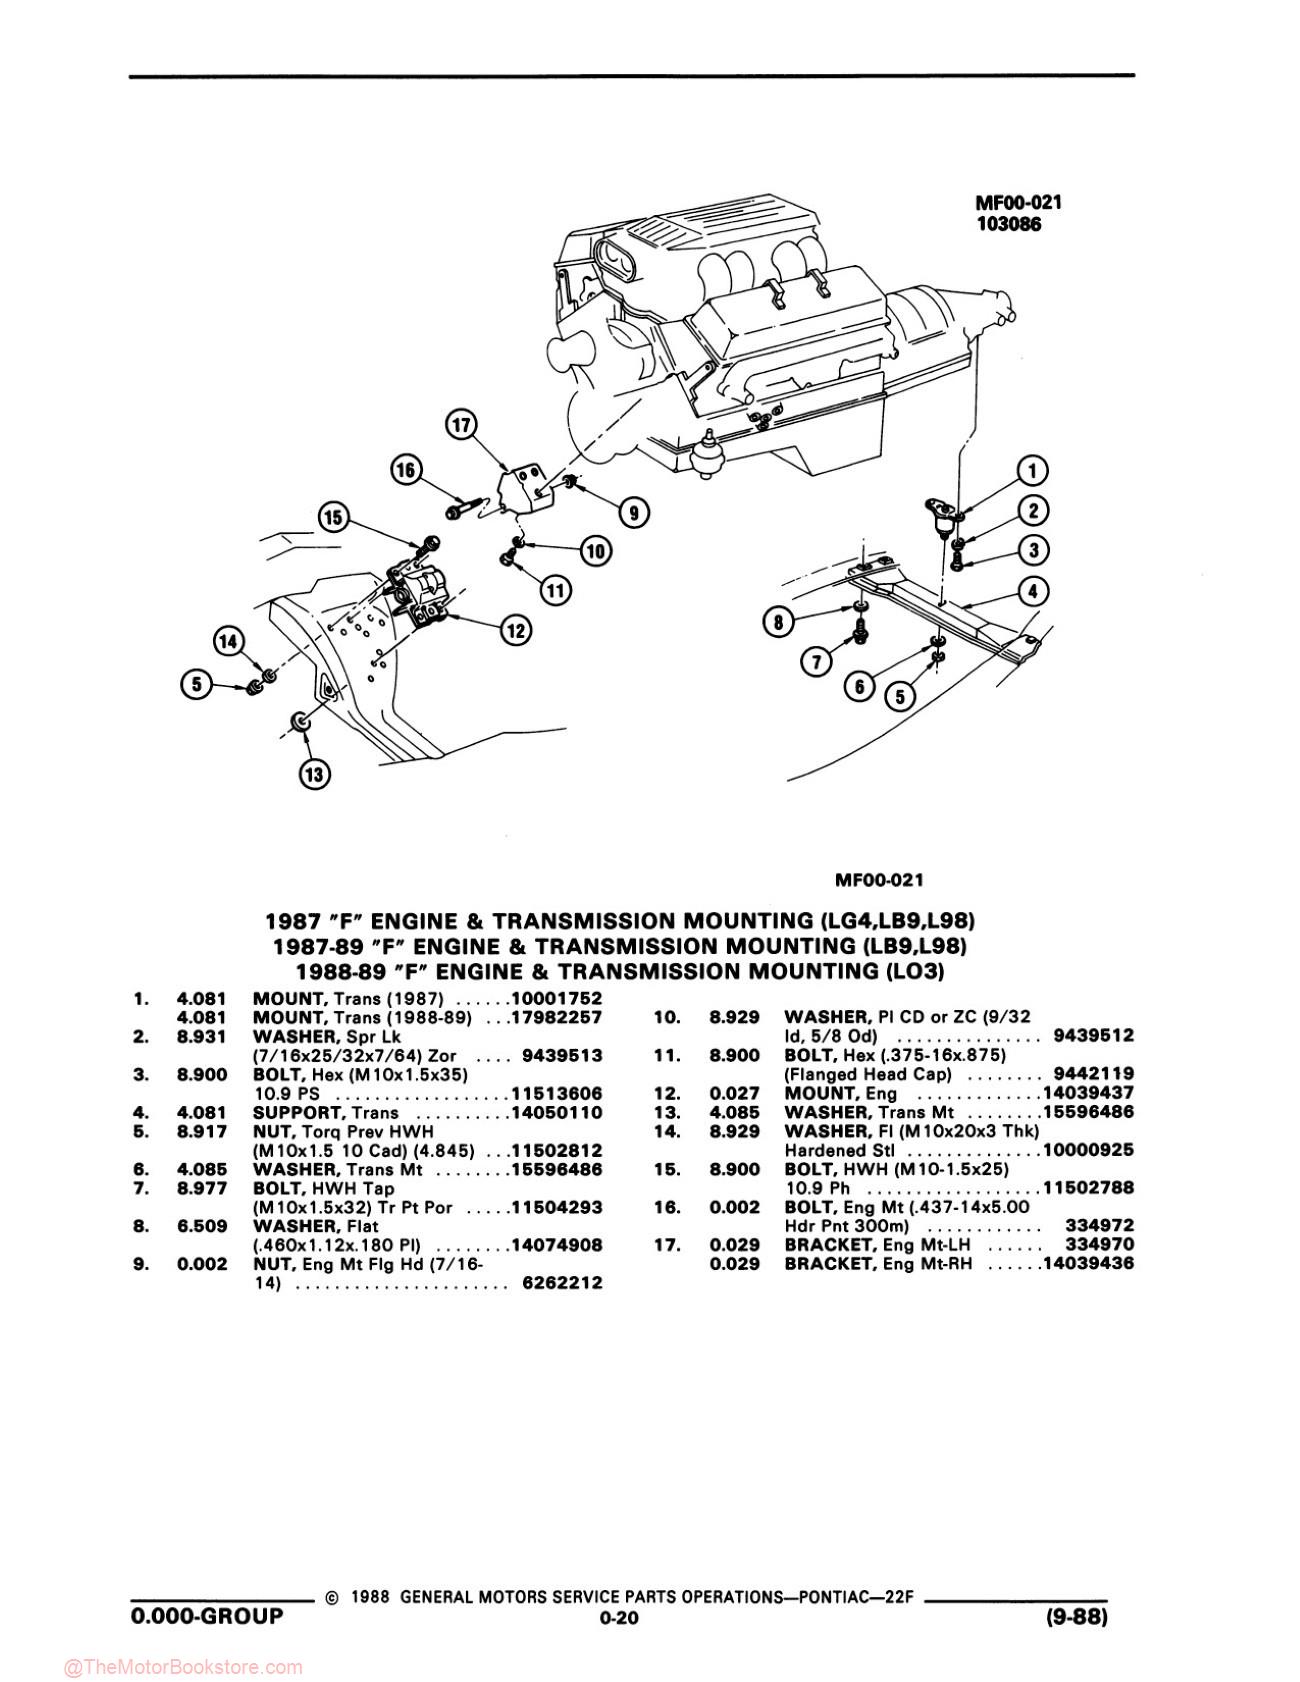 1989 Pontiac Firebird Parts & Illustrations Catalog - Sample Page 1